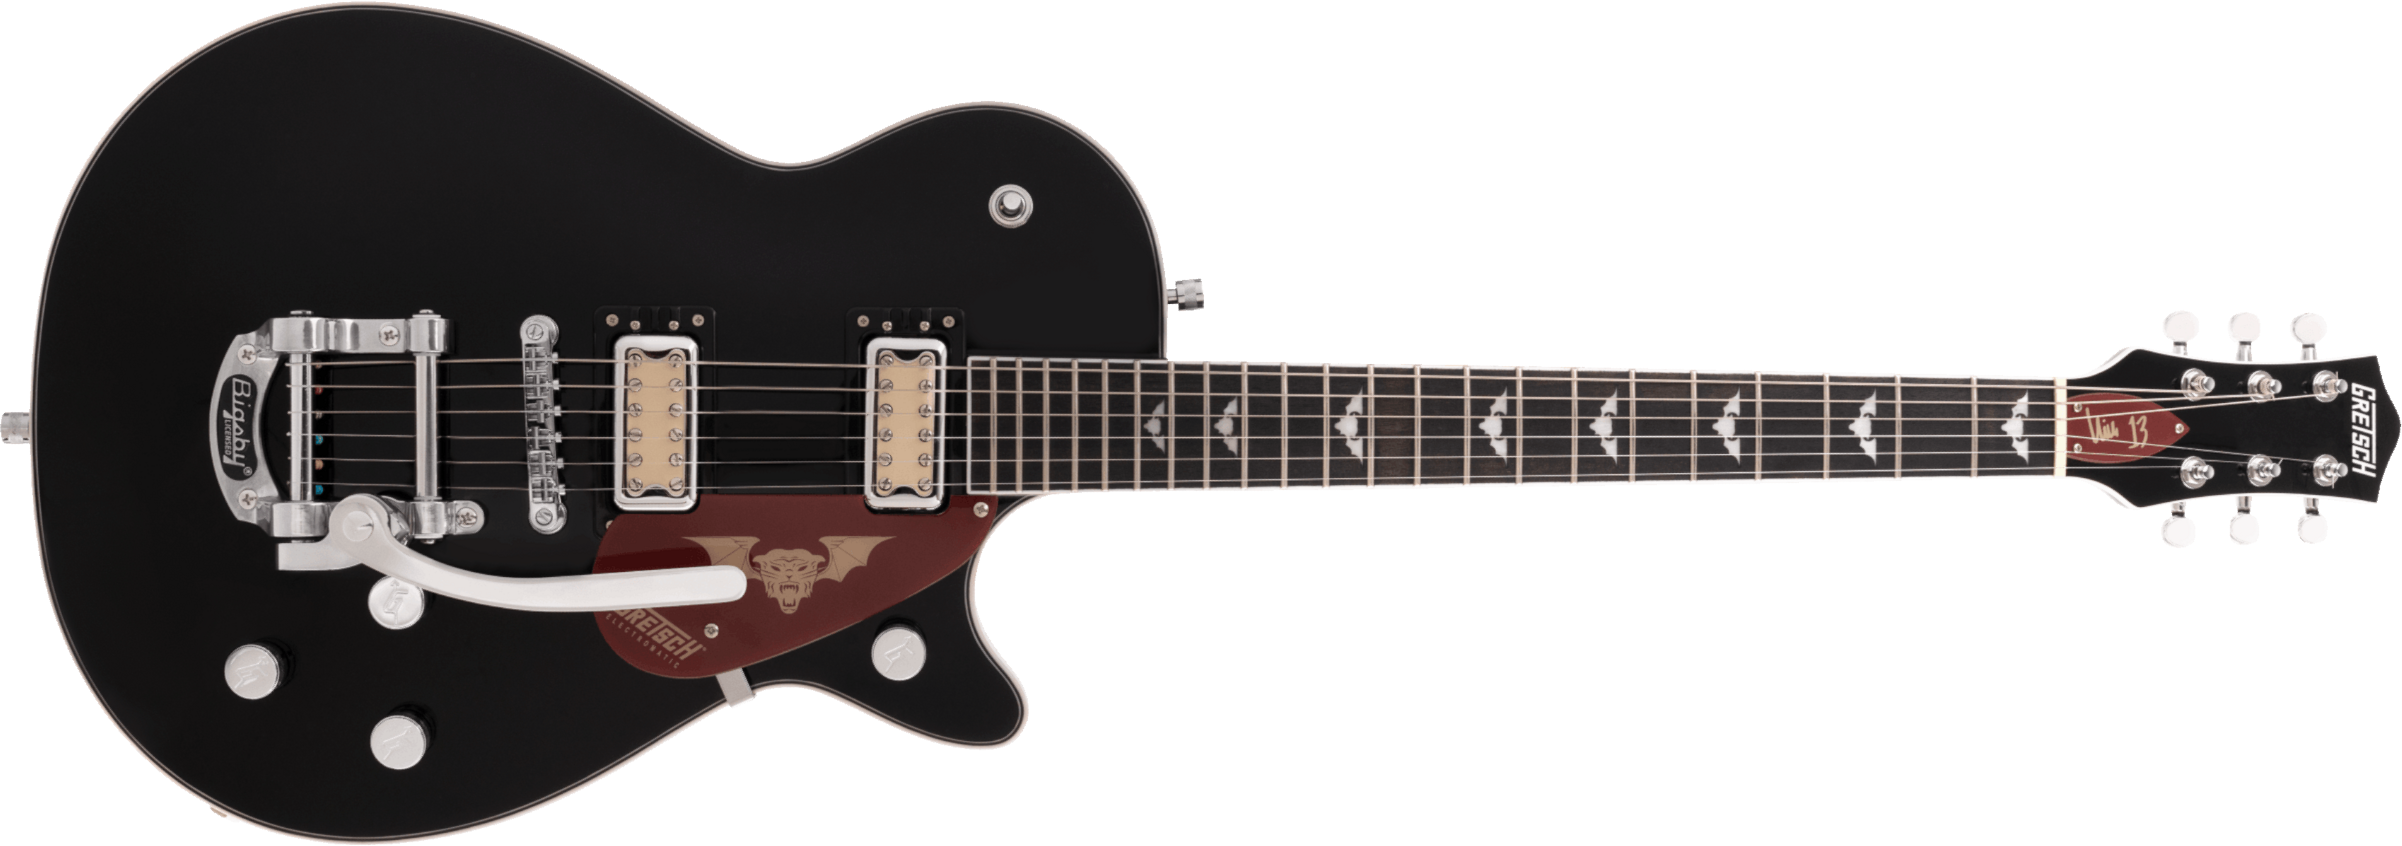 Gretsch G5230t Electromatic Jet Nick 13 Signature Bigsby Hh Trem Lau - Black - Single cut electric guitar - Main picture